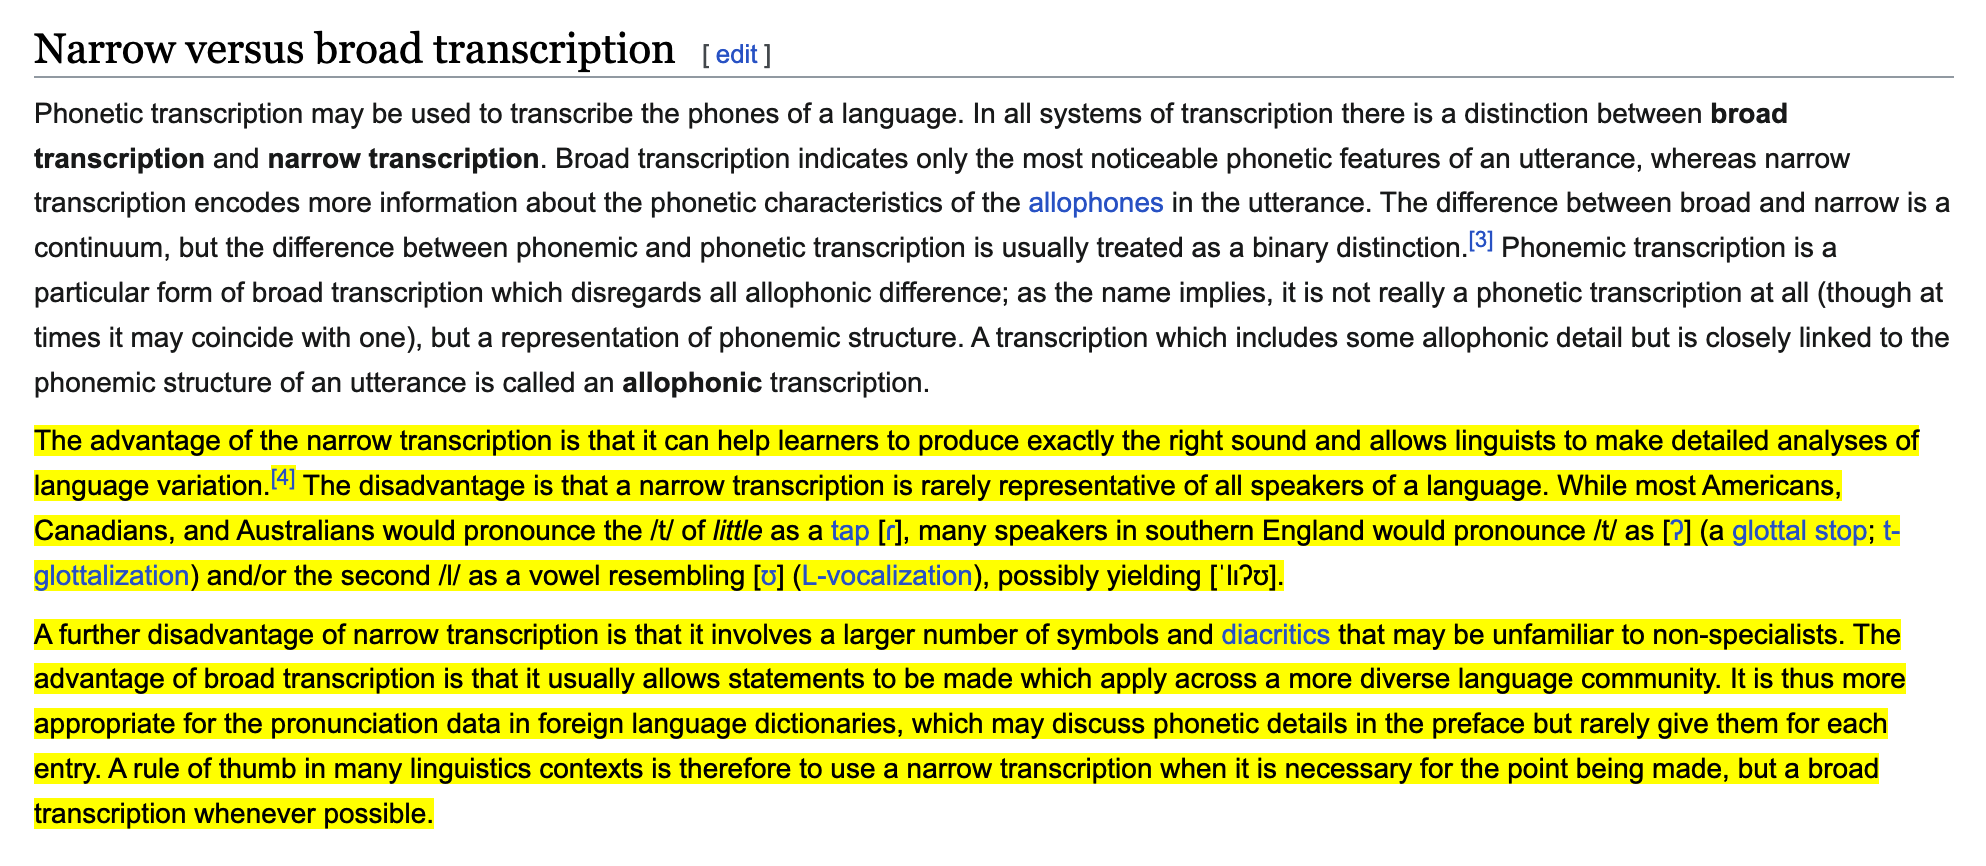 https://en.wikipedia.org/wiki/Phonetic_transcription